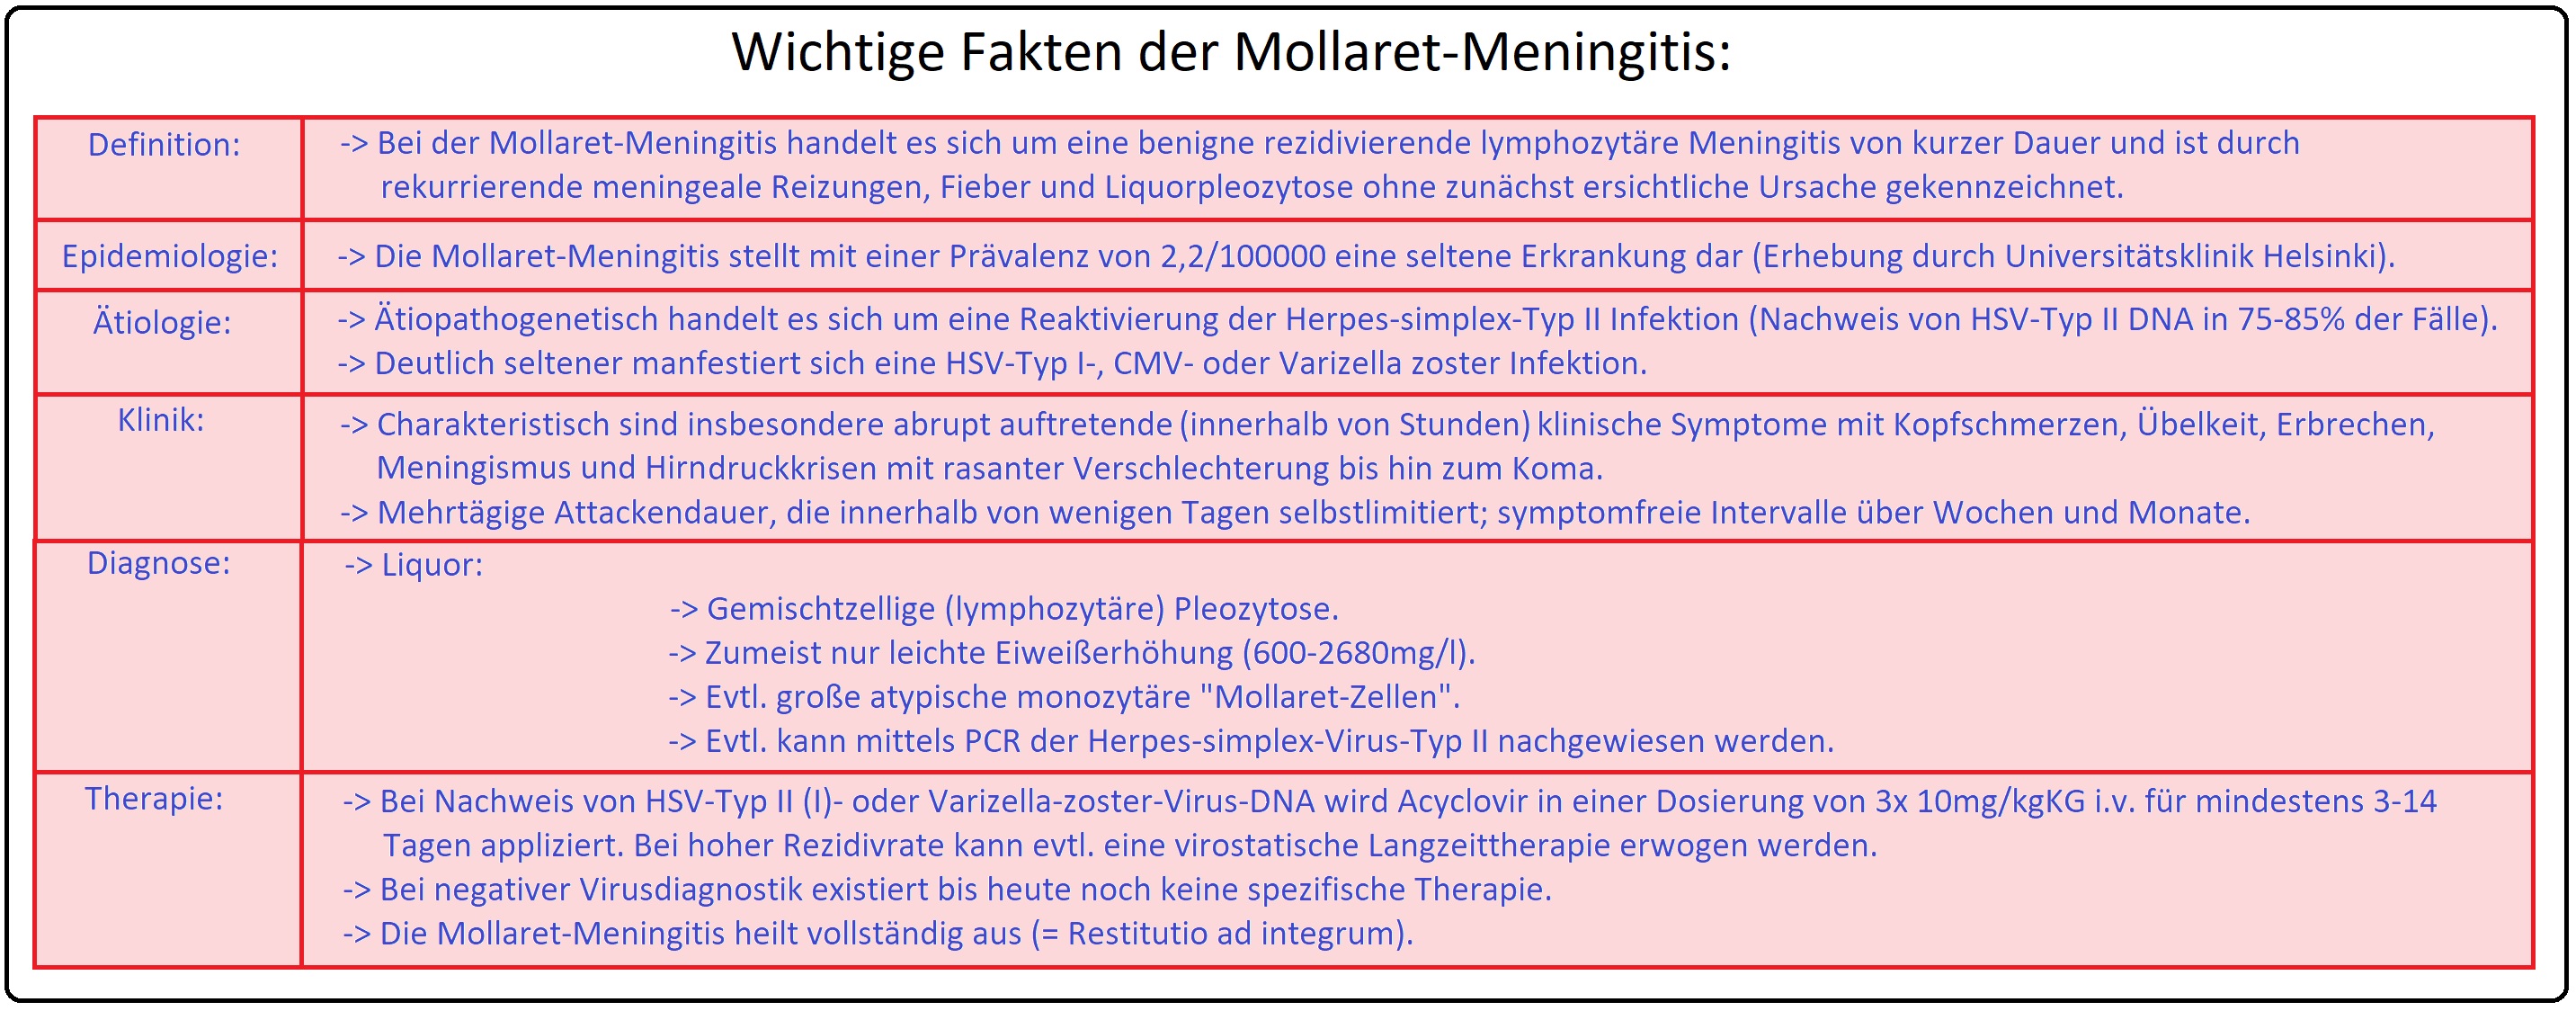 052 Wichtige Fakten der Mollaret Meningitis